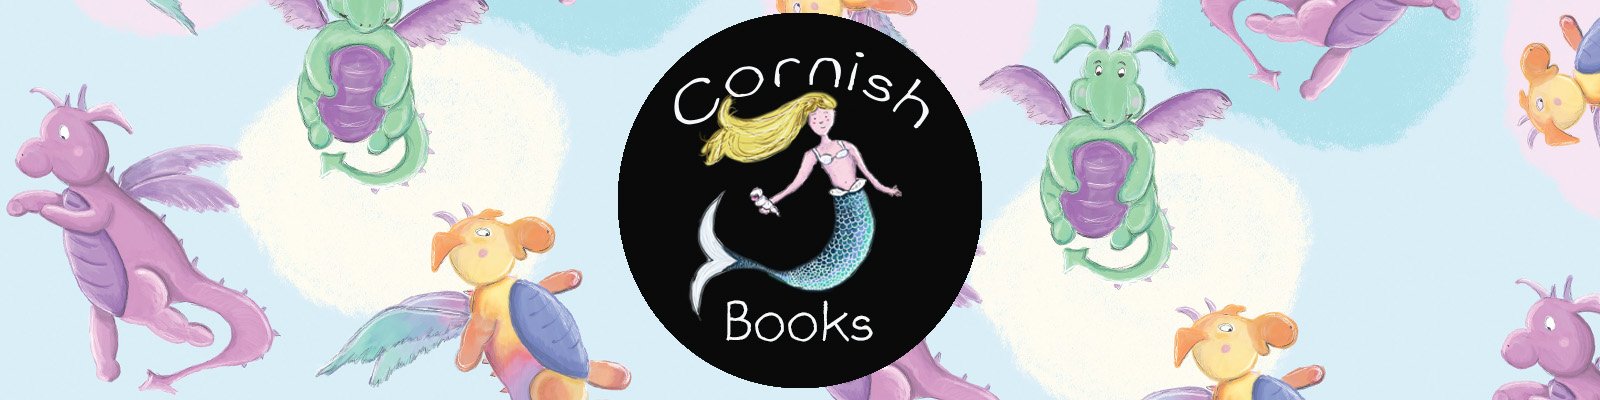 Cornish Books